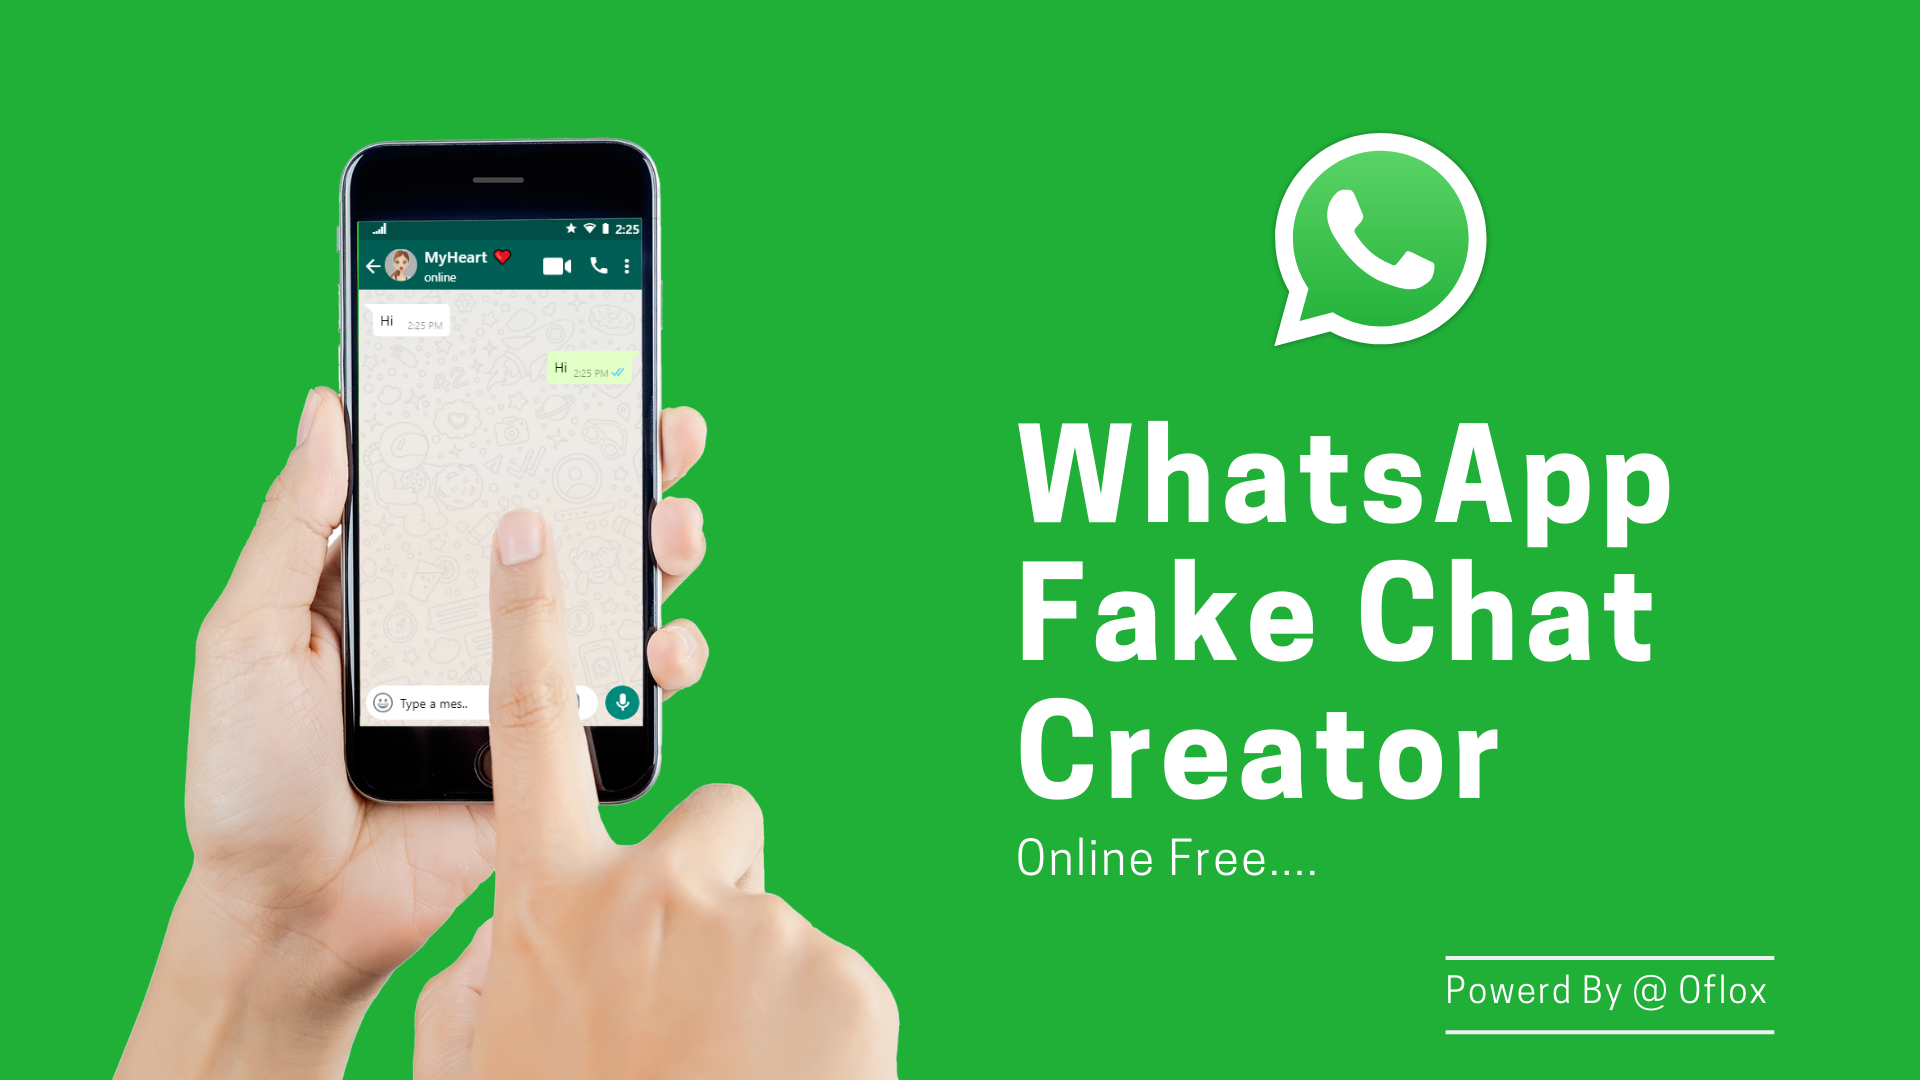 Whatsapp group chat generator